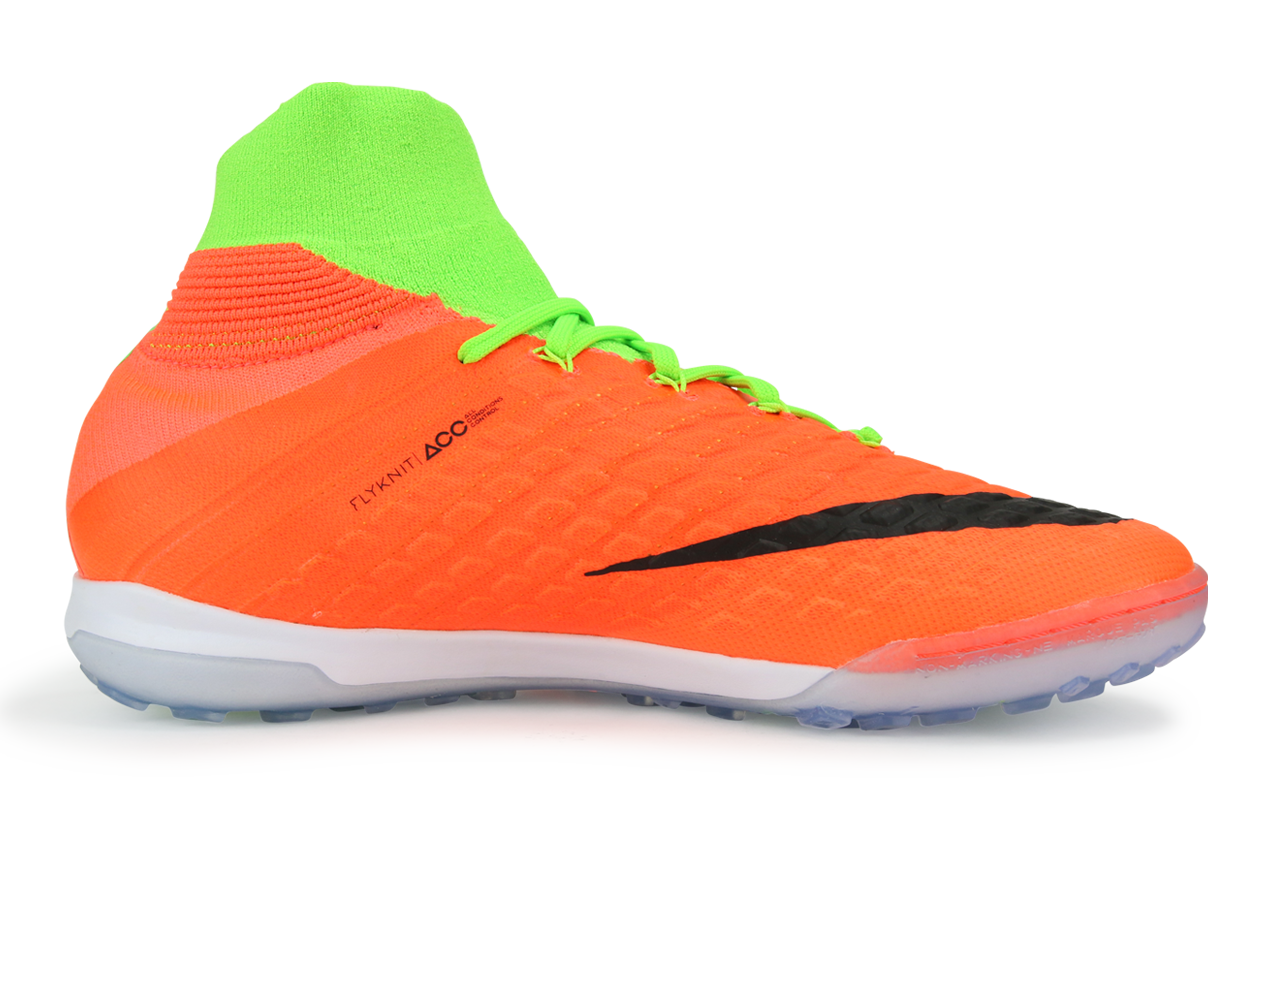 Nike Men's Hypervenom Proximo II Dynamic Fit Turf Soccer Shoes Electric Green/Black/Hyper Orange